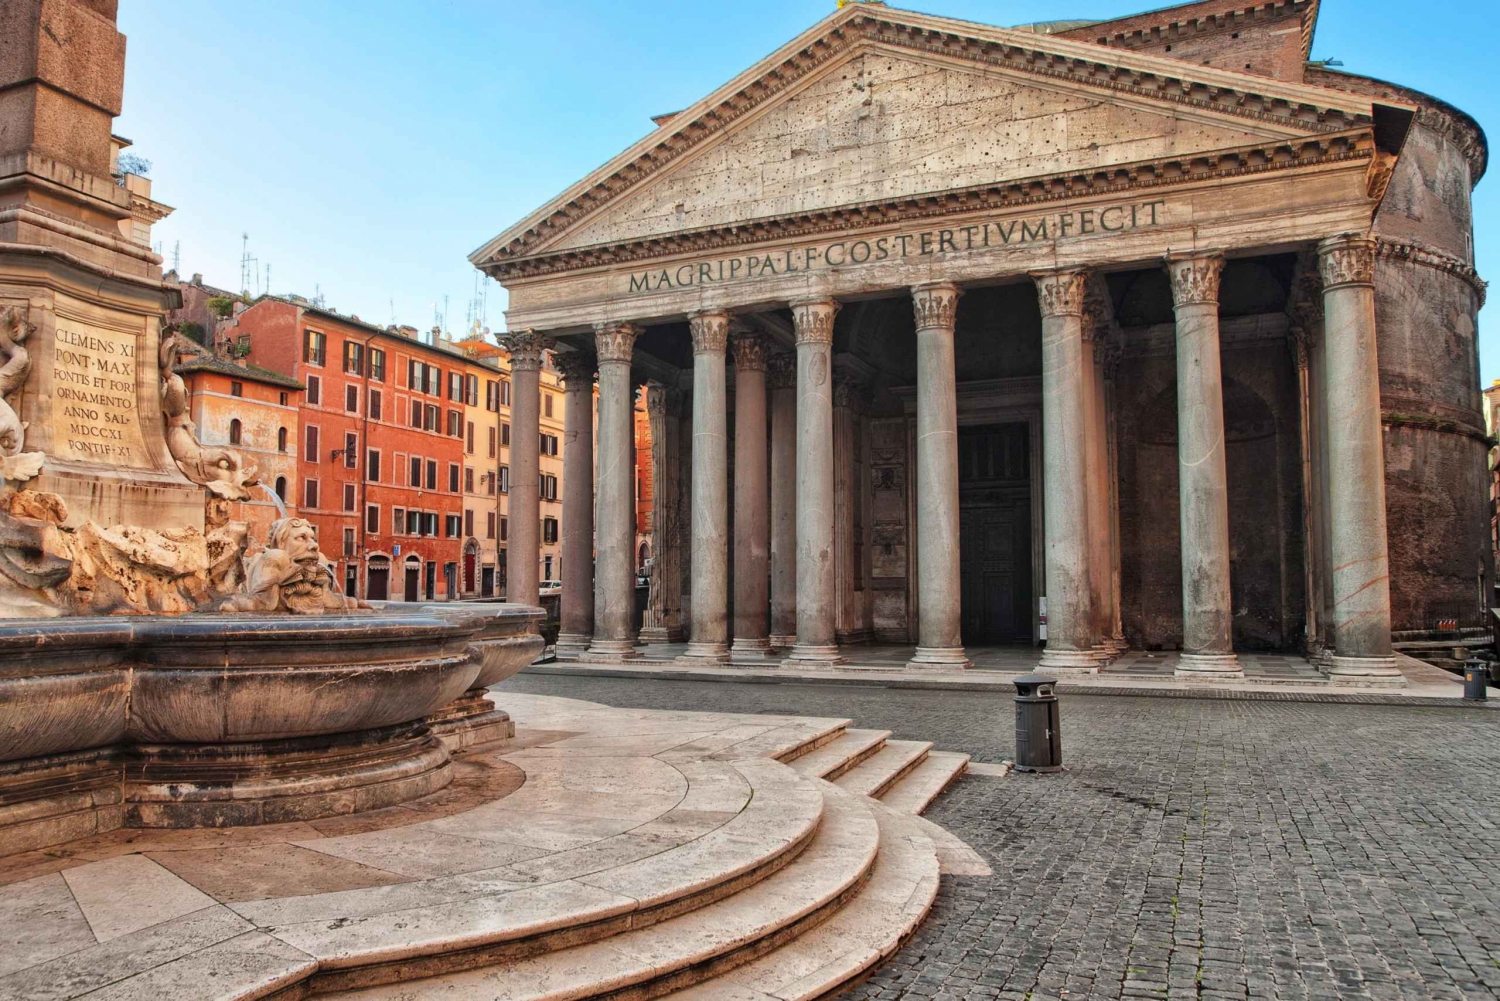 Rome: Pantheon Skip-the-Line Ticket